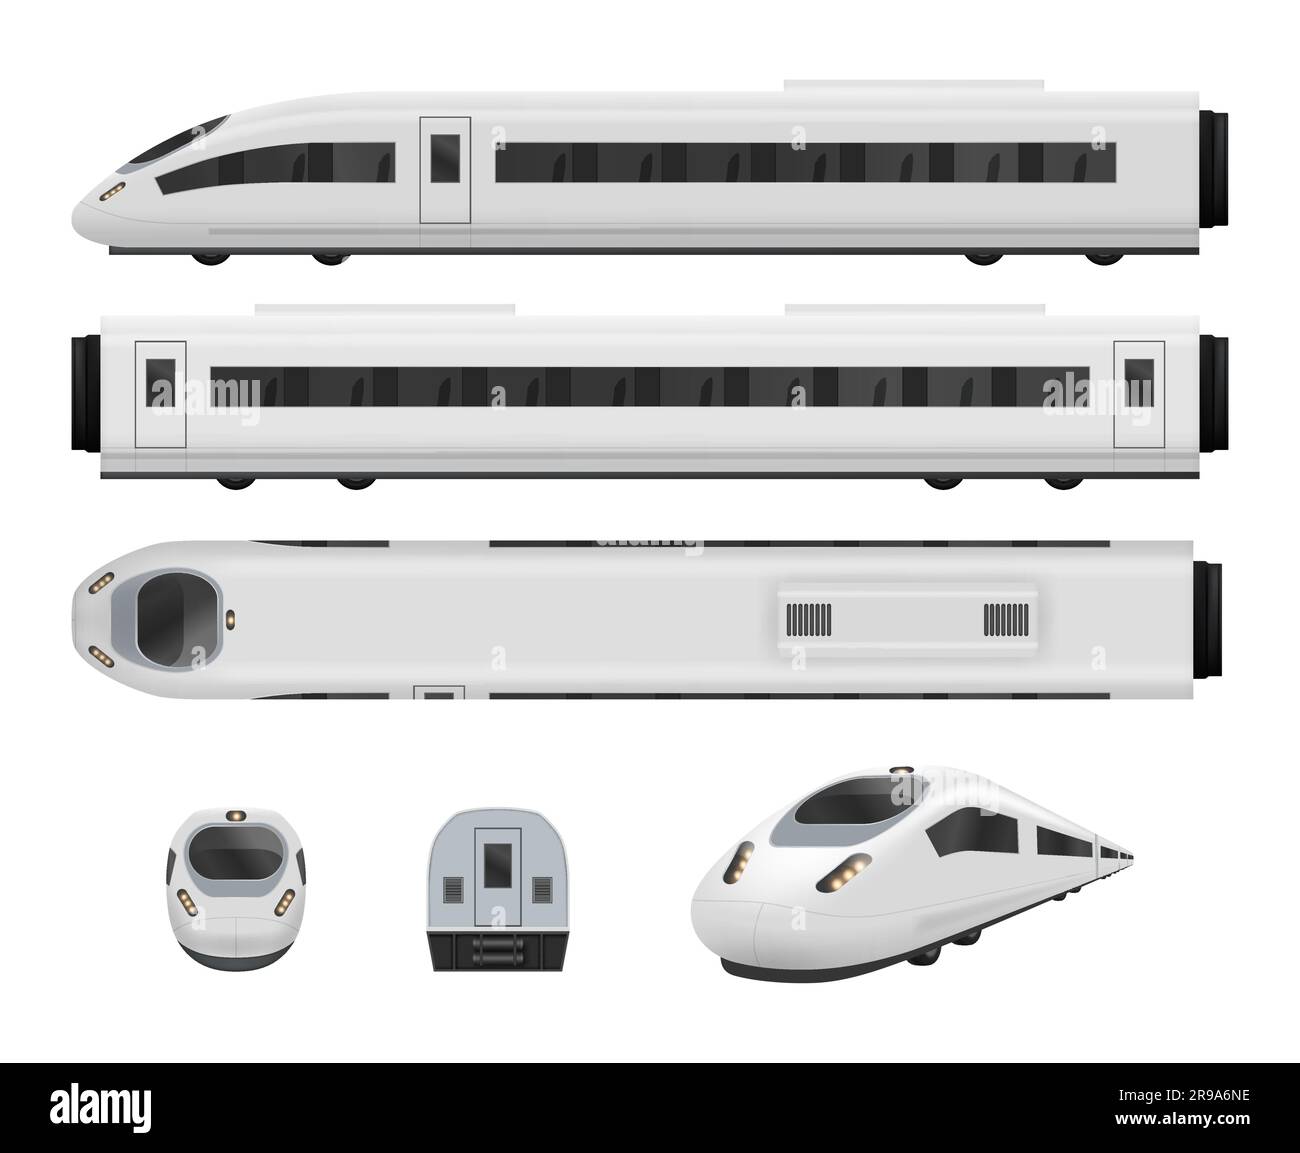 Intercity passenger trains Stock Vector Images - Alamy